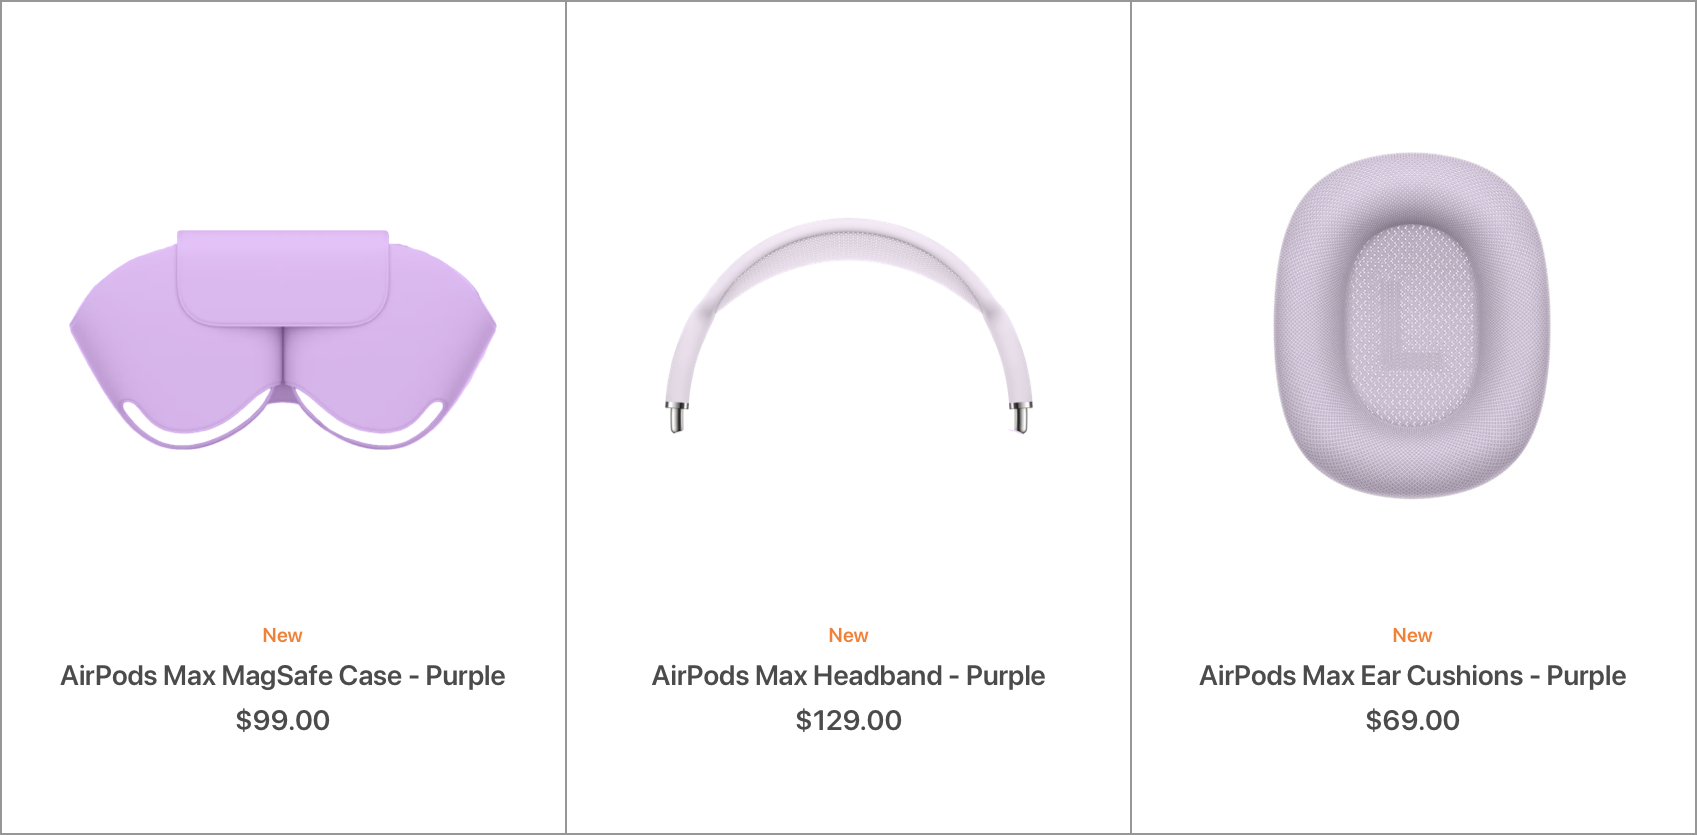 Размеры аирподс. Apple AIRPODS Max 2. AIRPODS Max размер амбушюр. Наушники Apple Max цвета. Apple AIRPODS Max без амбушюр.